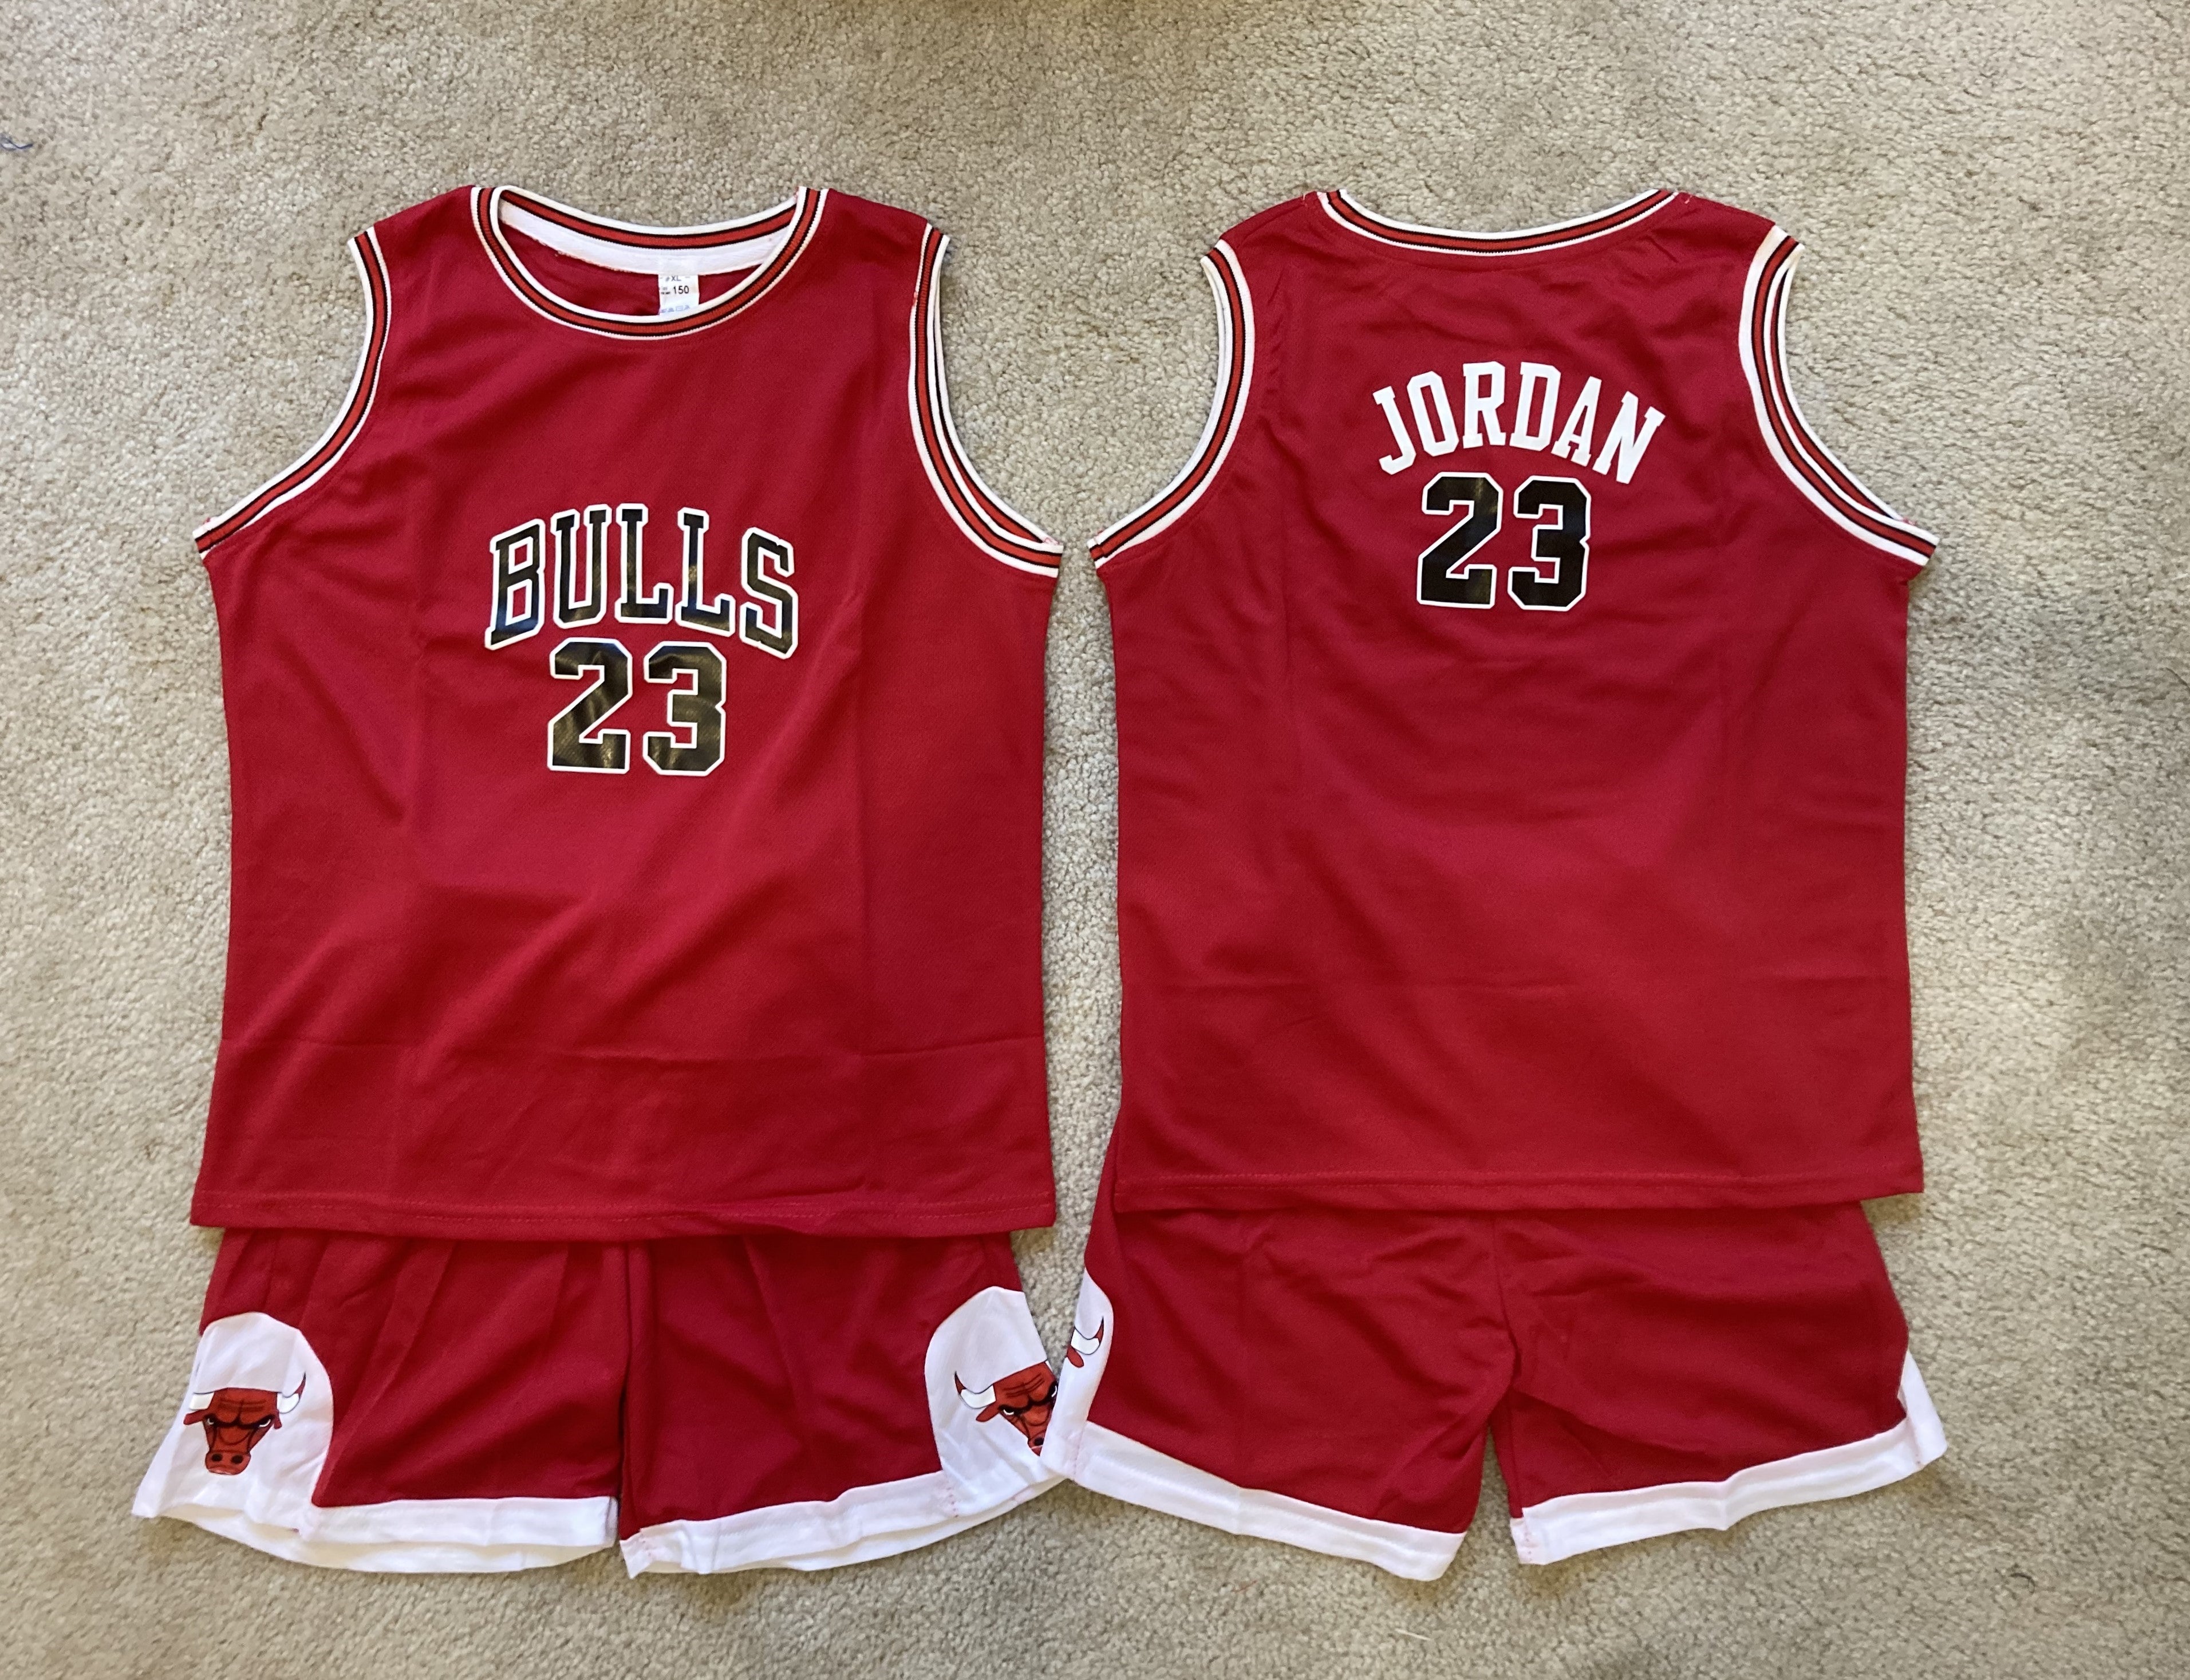 Youth Basketball Uniforms - Jersey & Shorts - Bryant Jordan Curry - 2T